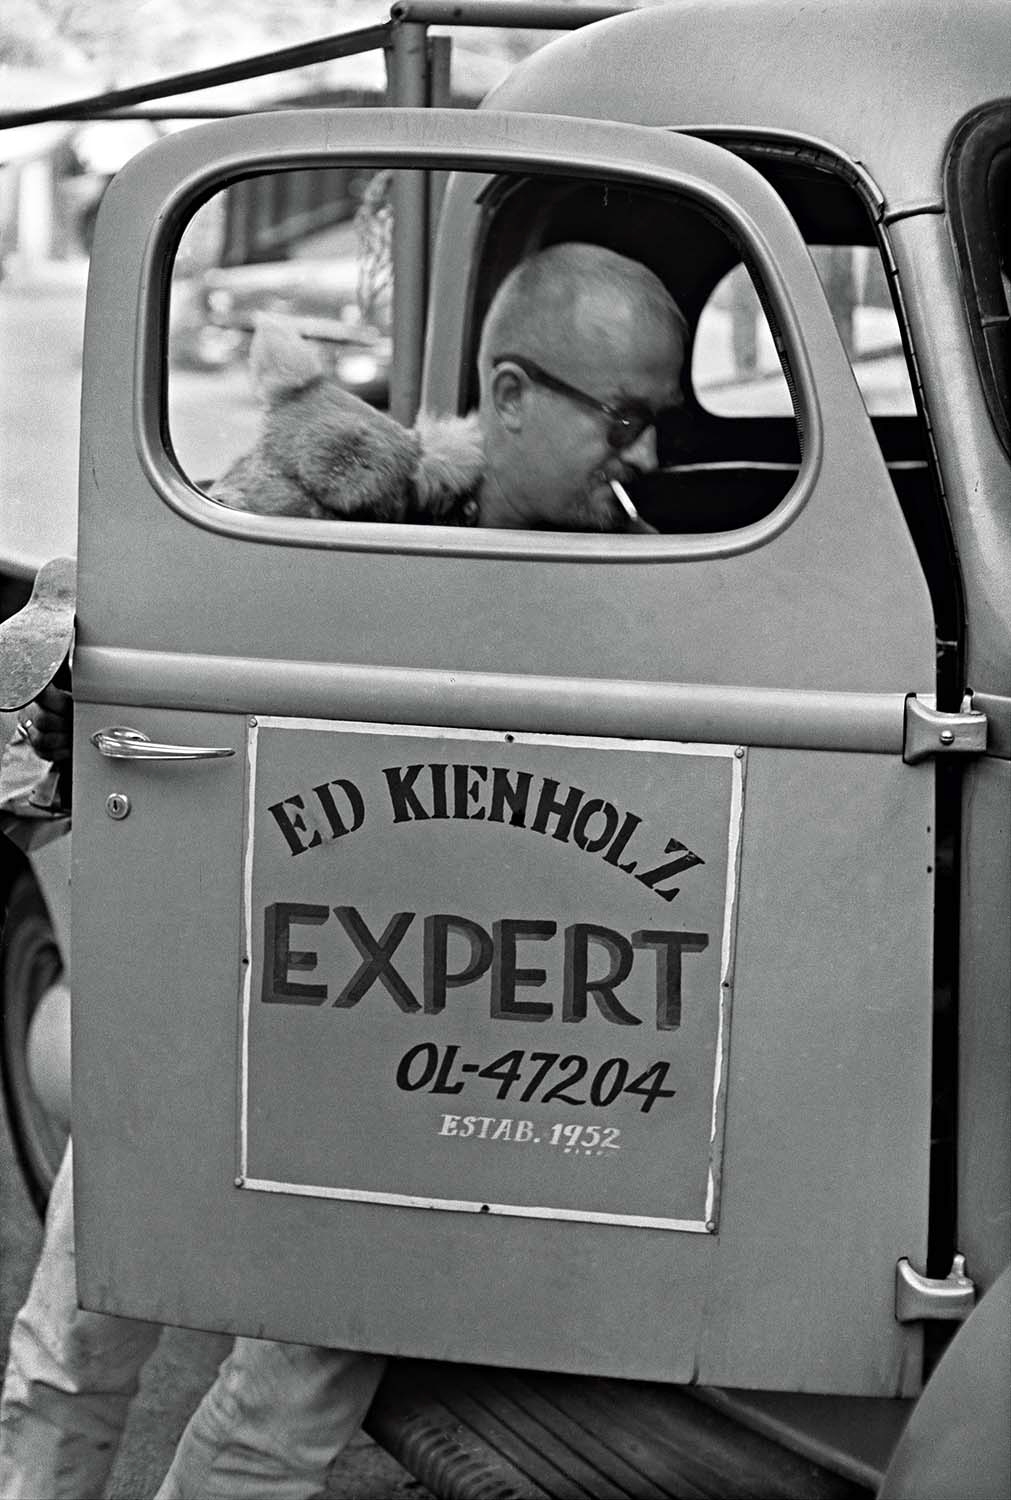  EDWARD KIENHOLZ   Ed Kienholz Expert, 1963  